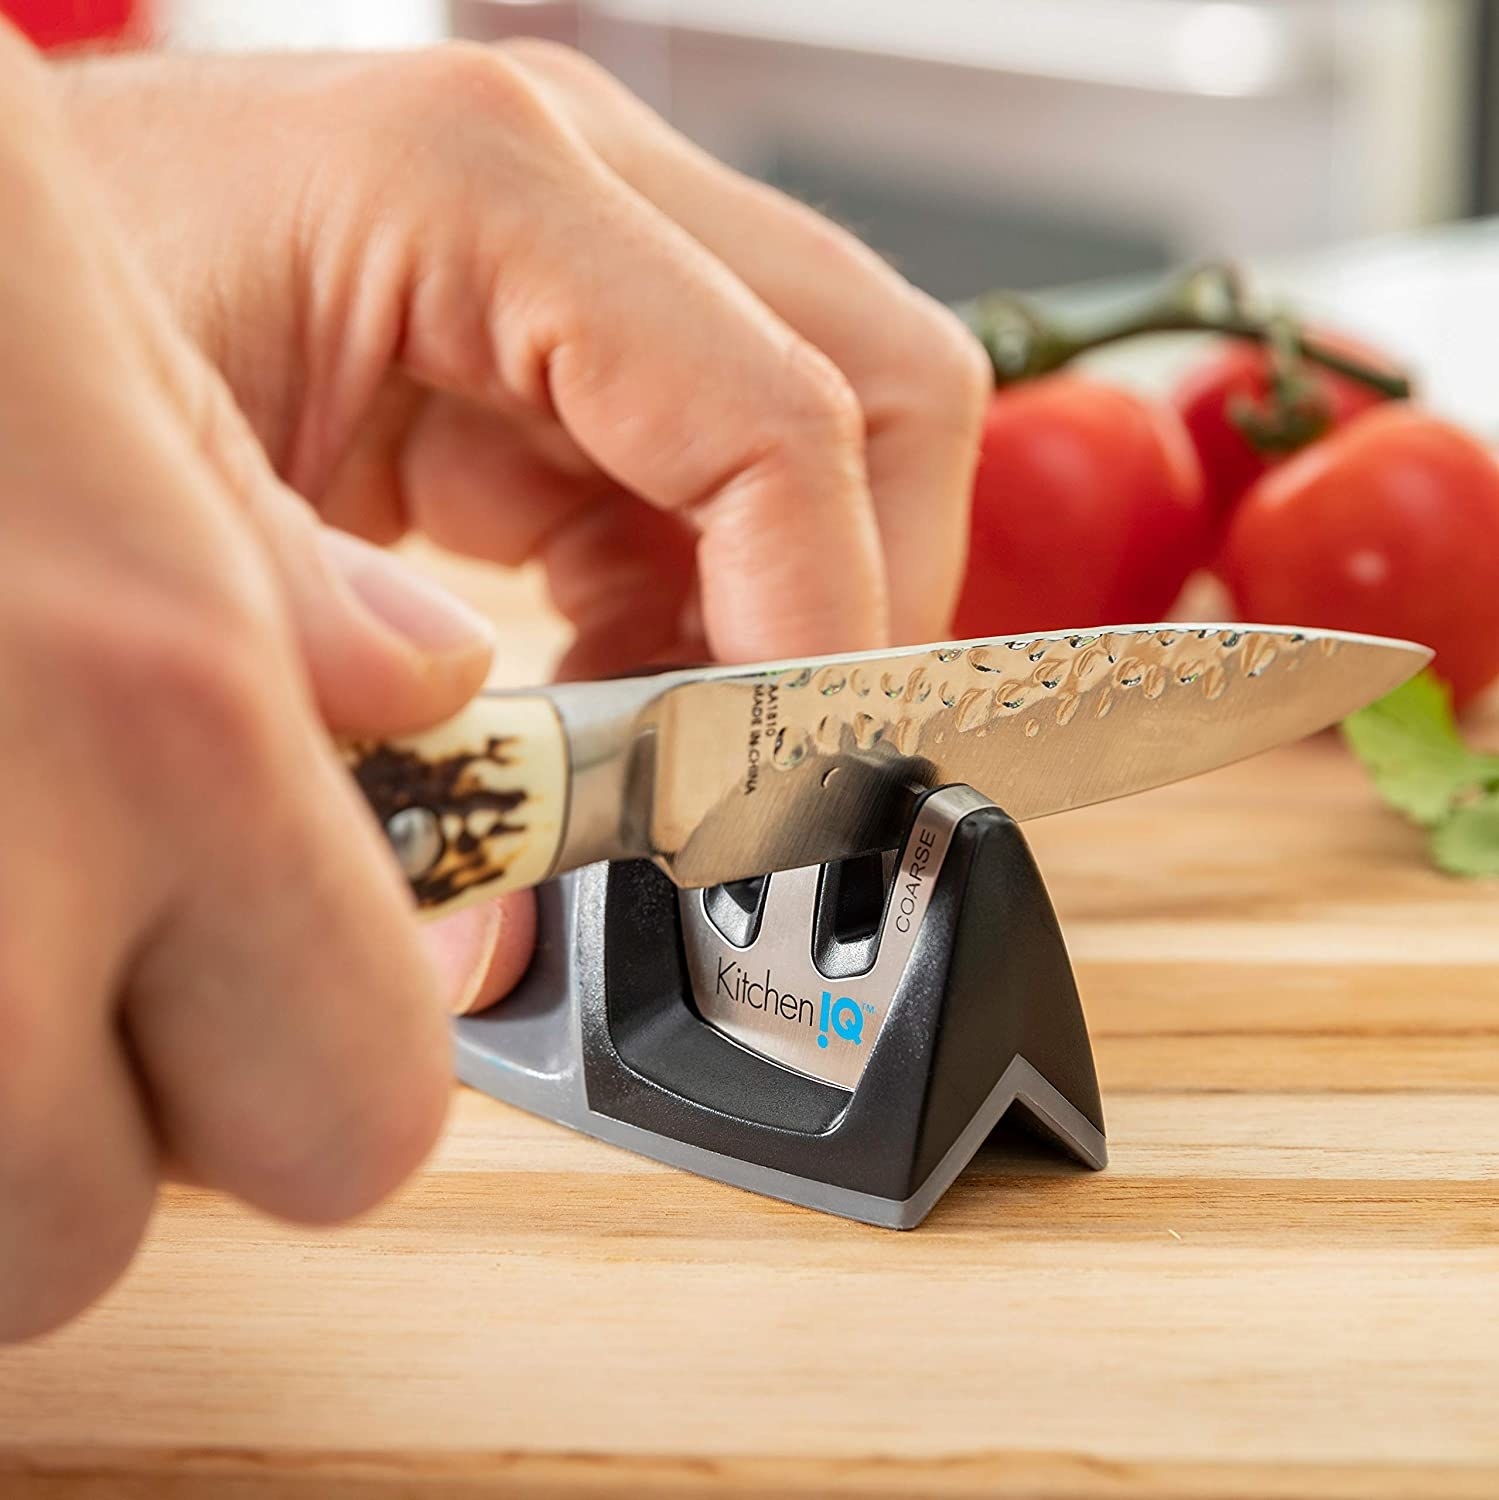 model sharpening knife in sharpener, tomatoes in background